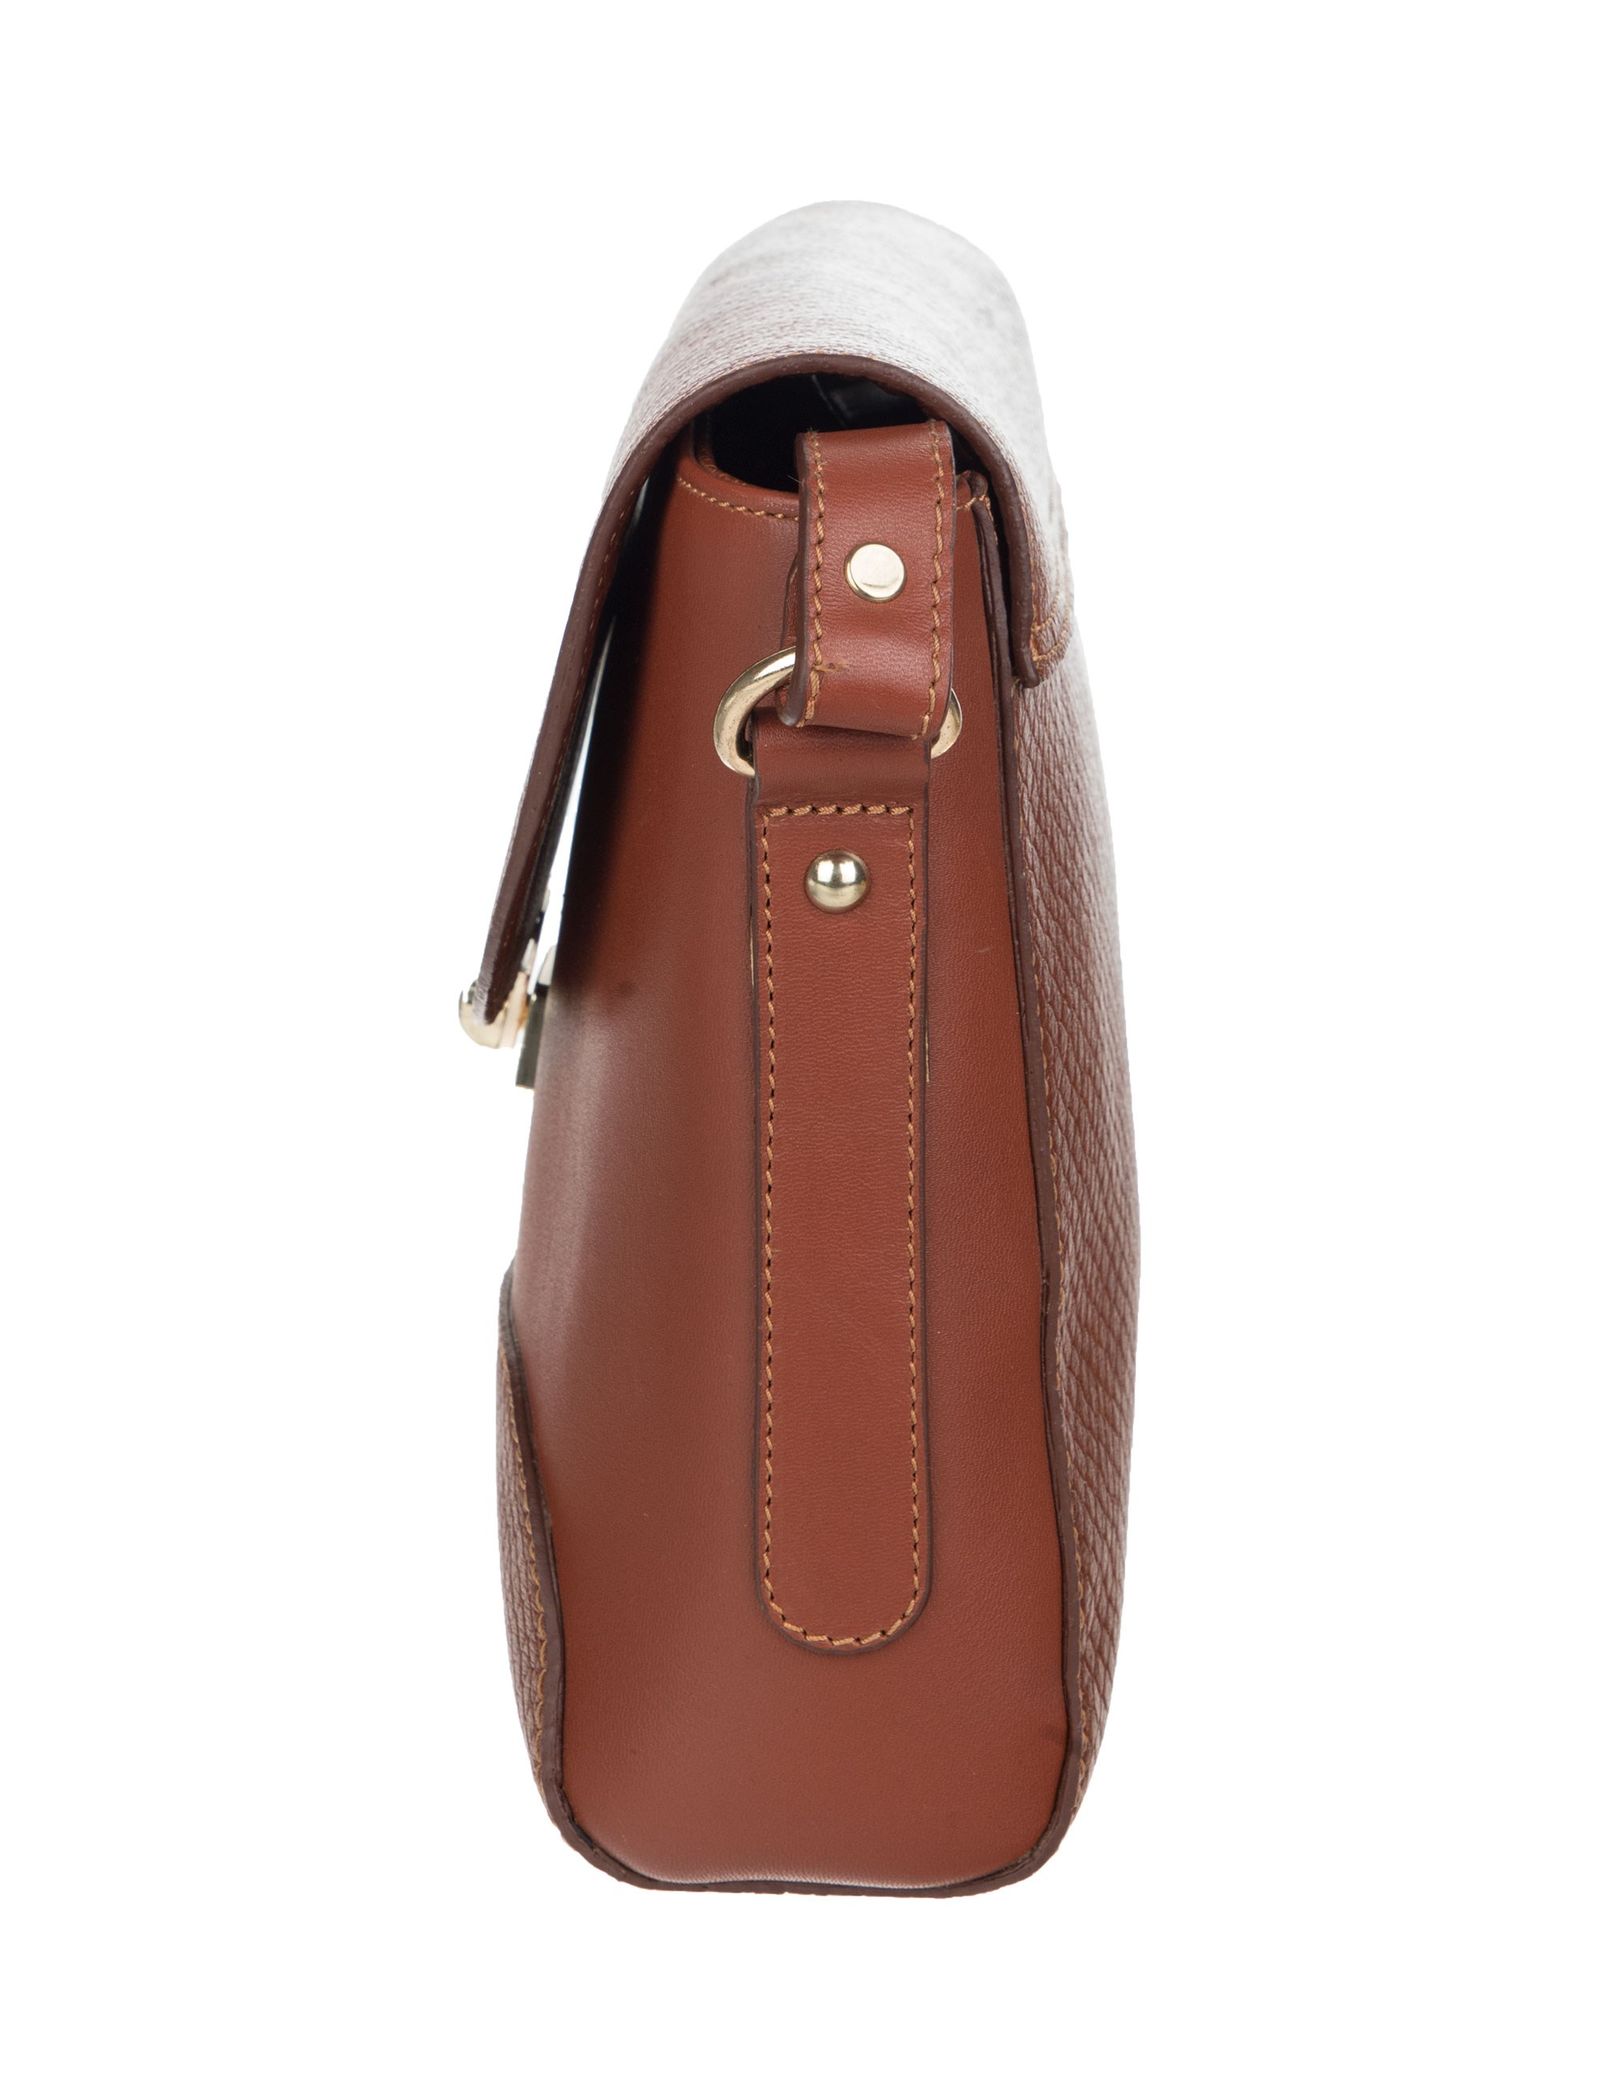 Women Leather Casual Shoulder Bag - شیفر تک سایز - عسلي - 7